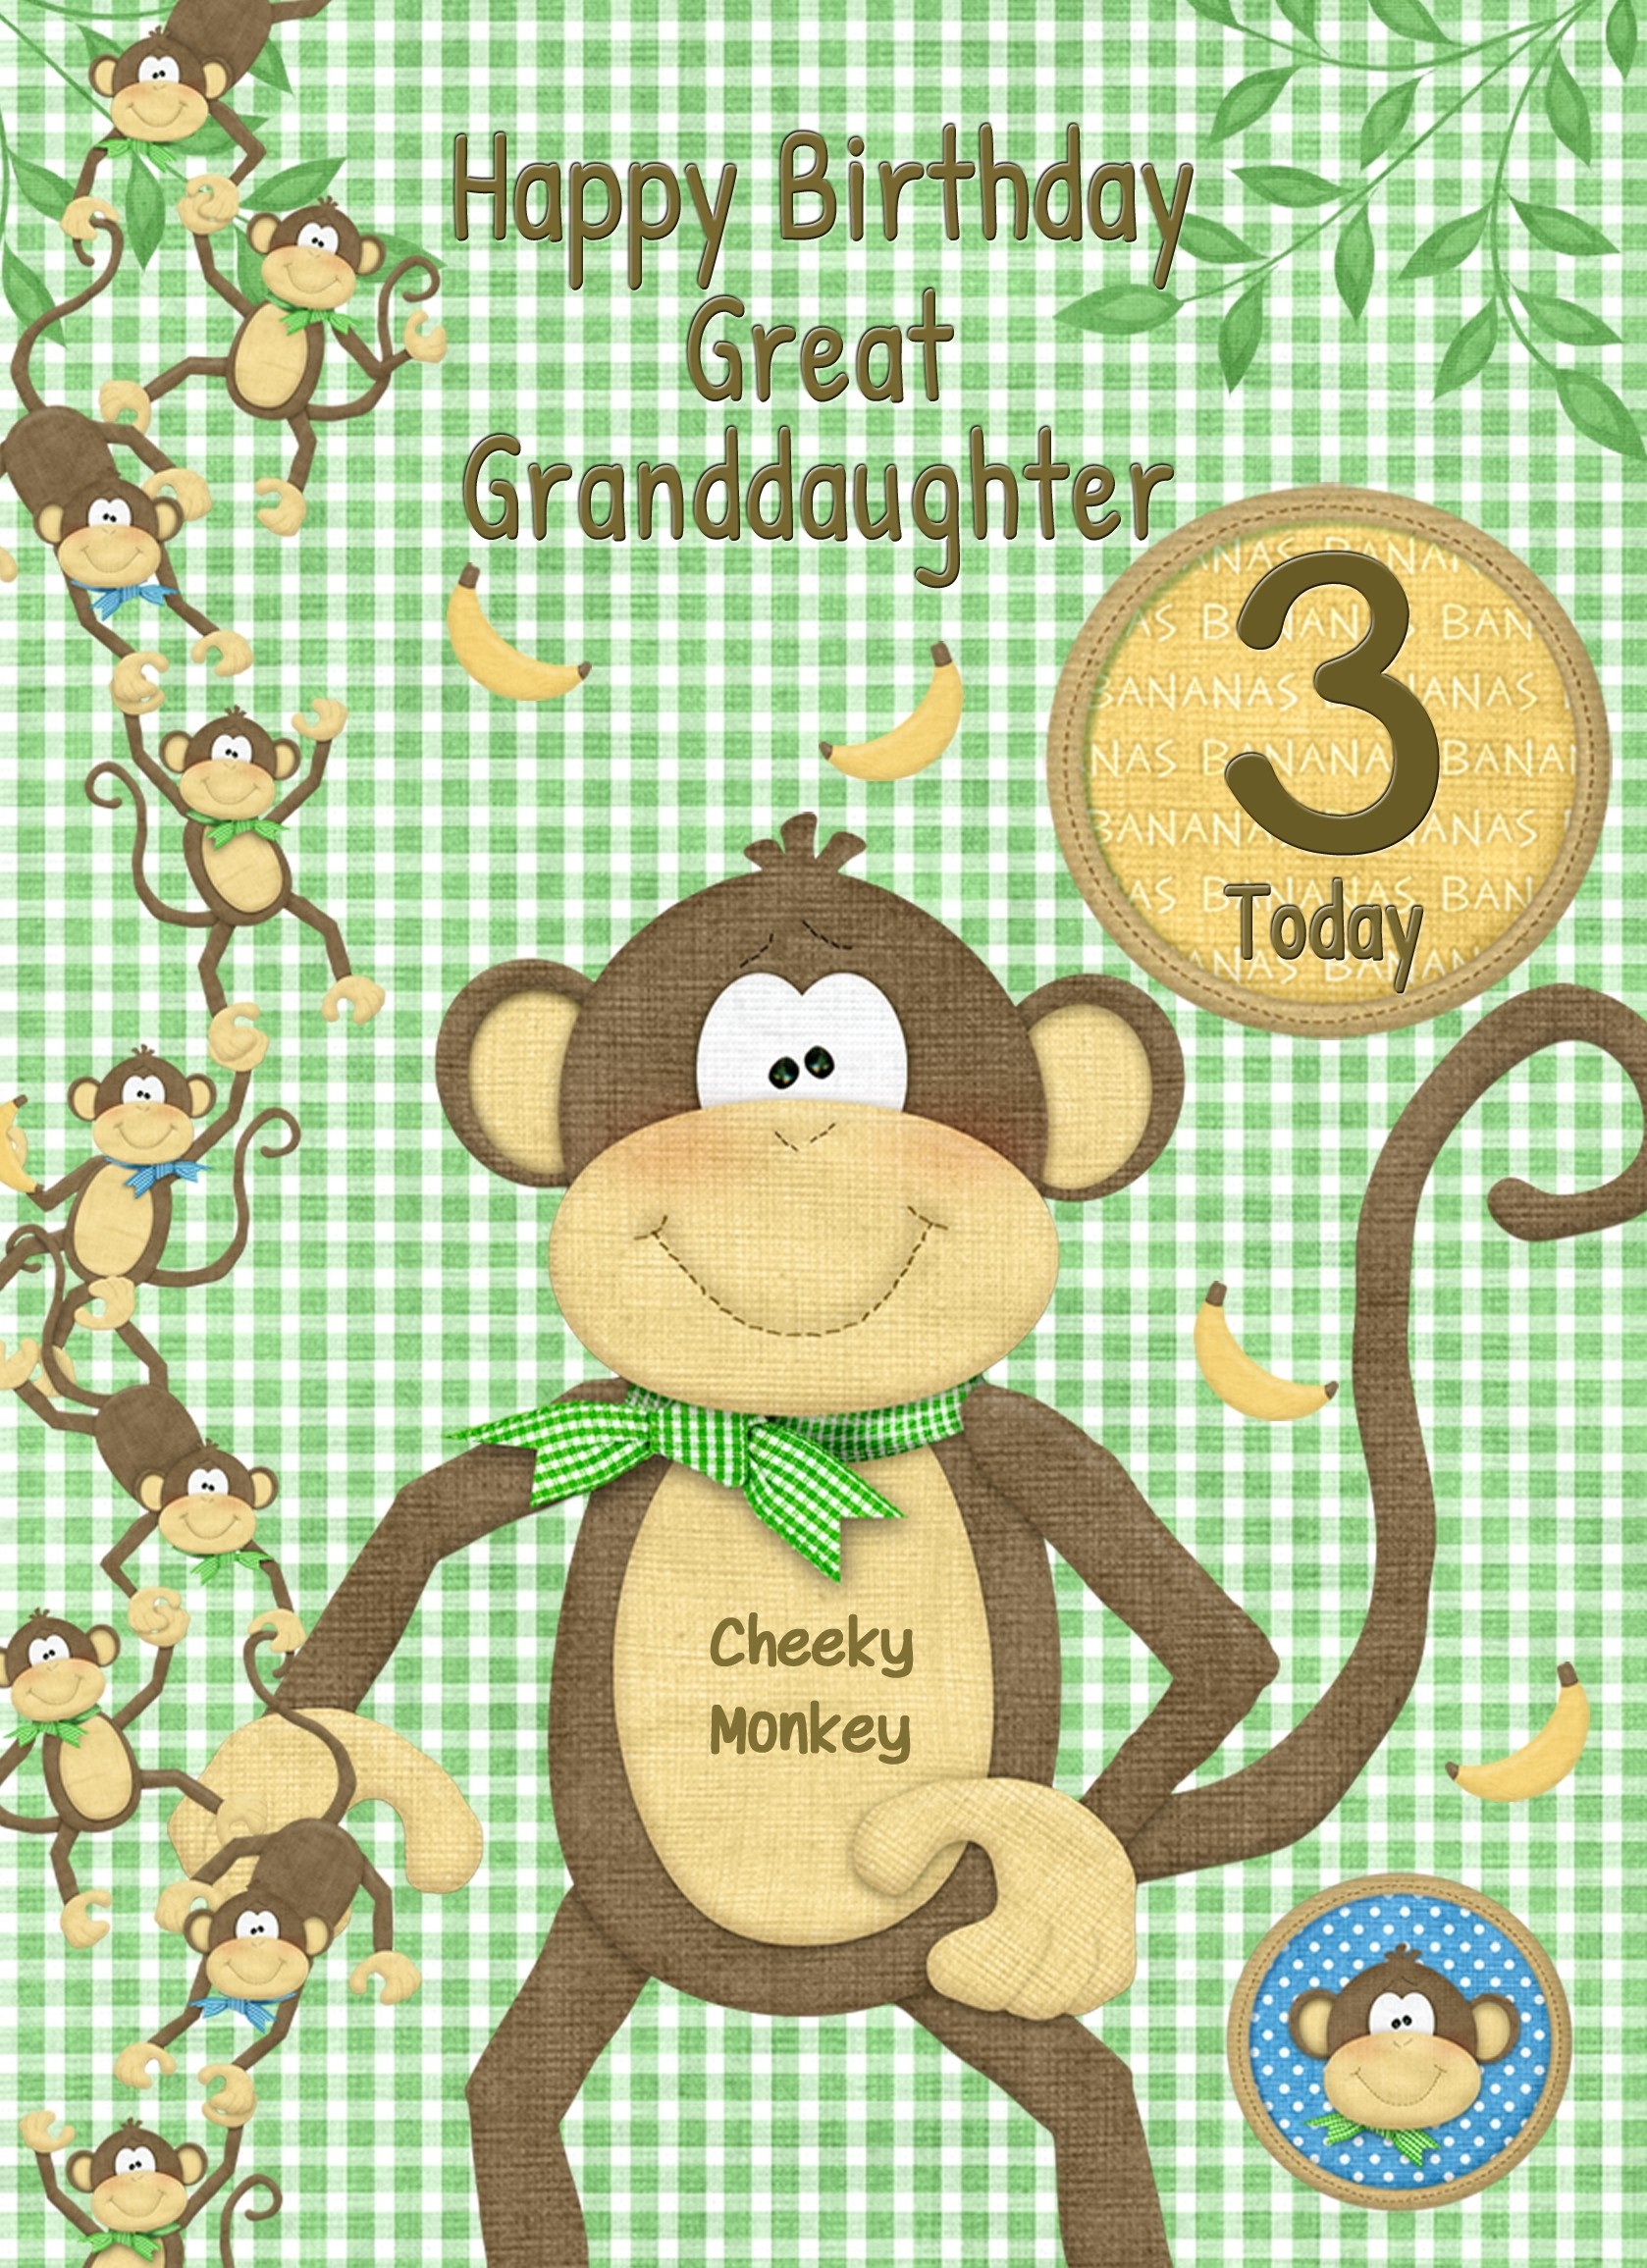 Kids 3rd Birthday Cheeky Monkey Cartoon Card for Great Granddaughter